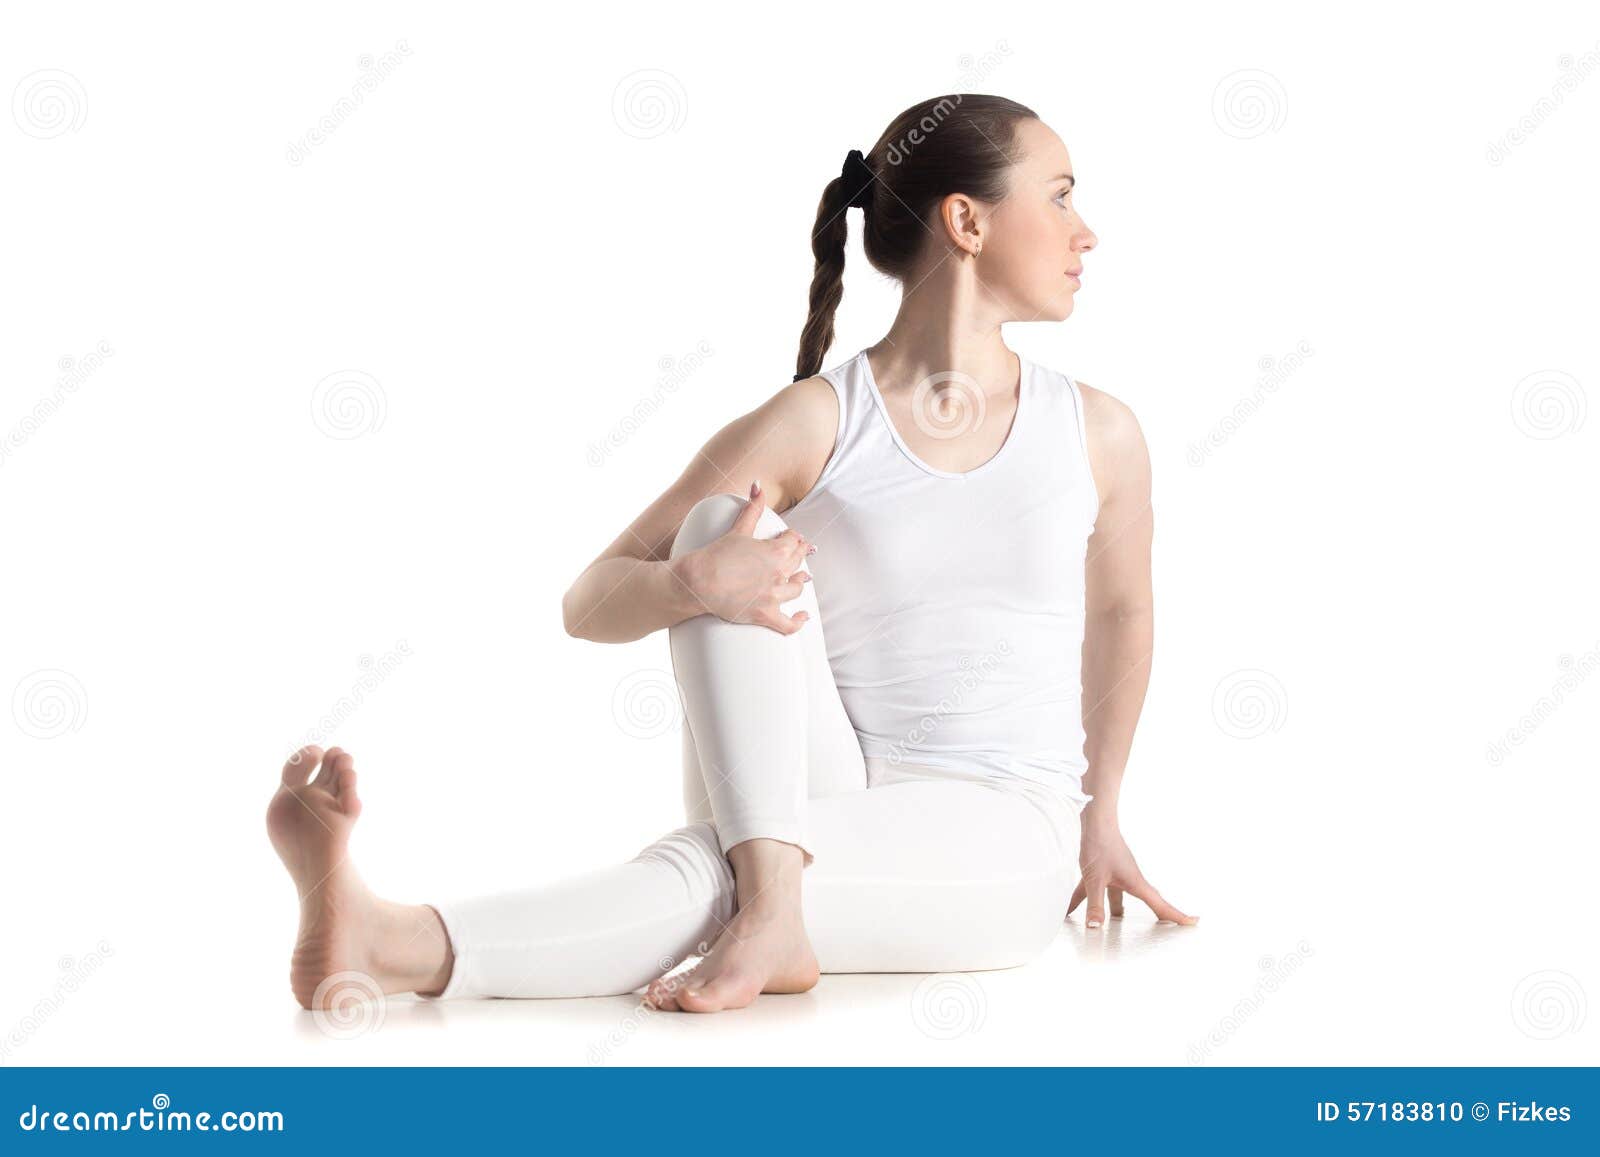 Ardha Matsyendrasana | The Half Spinal Twist Pose | Steps | Benefits